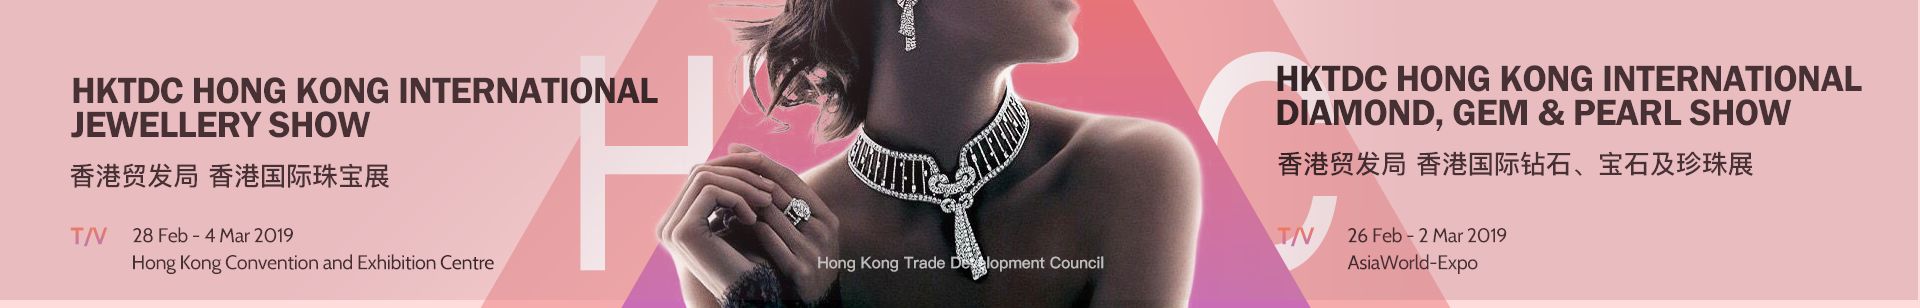 HK Int'l Jewellery Show & Diamond, Gem and Pearl Show